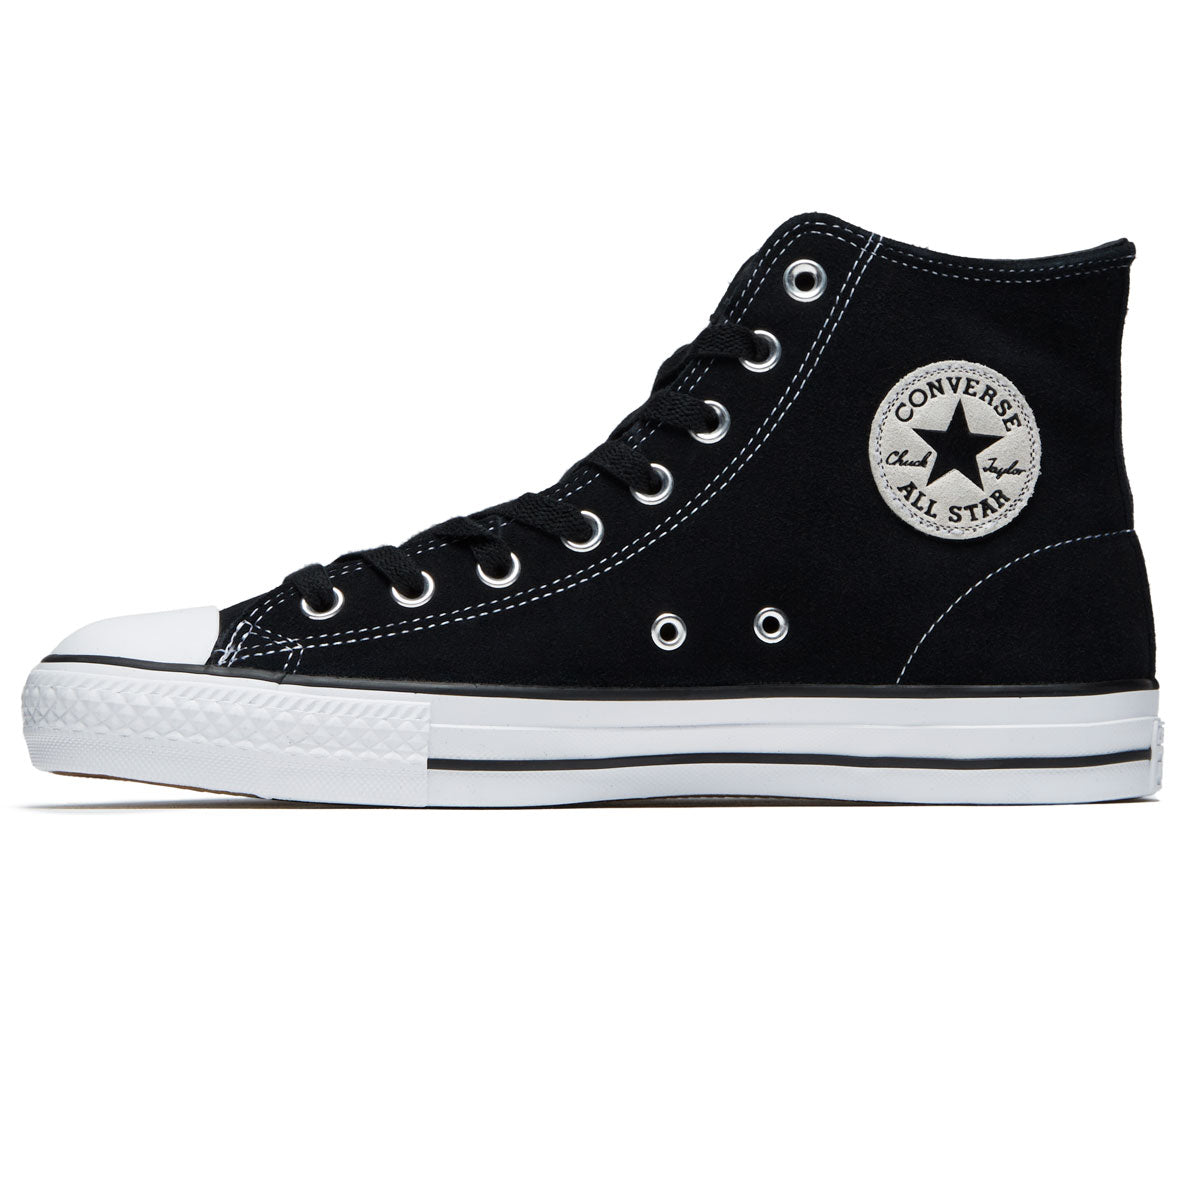 Converse Chuck Taylor All Star Pro Suede Hi Shoes - Black/Black/White – CCS